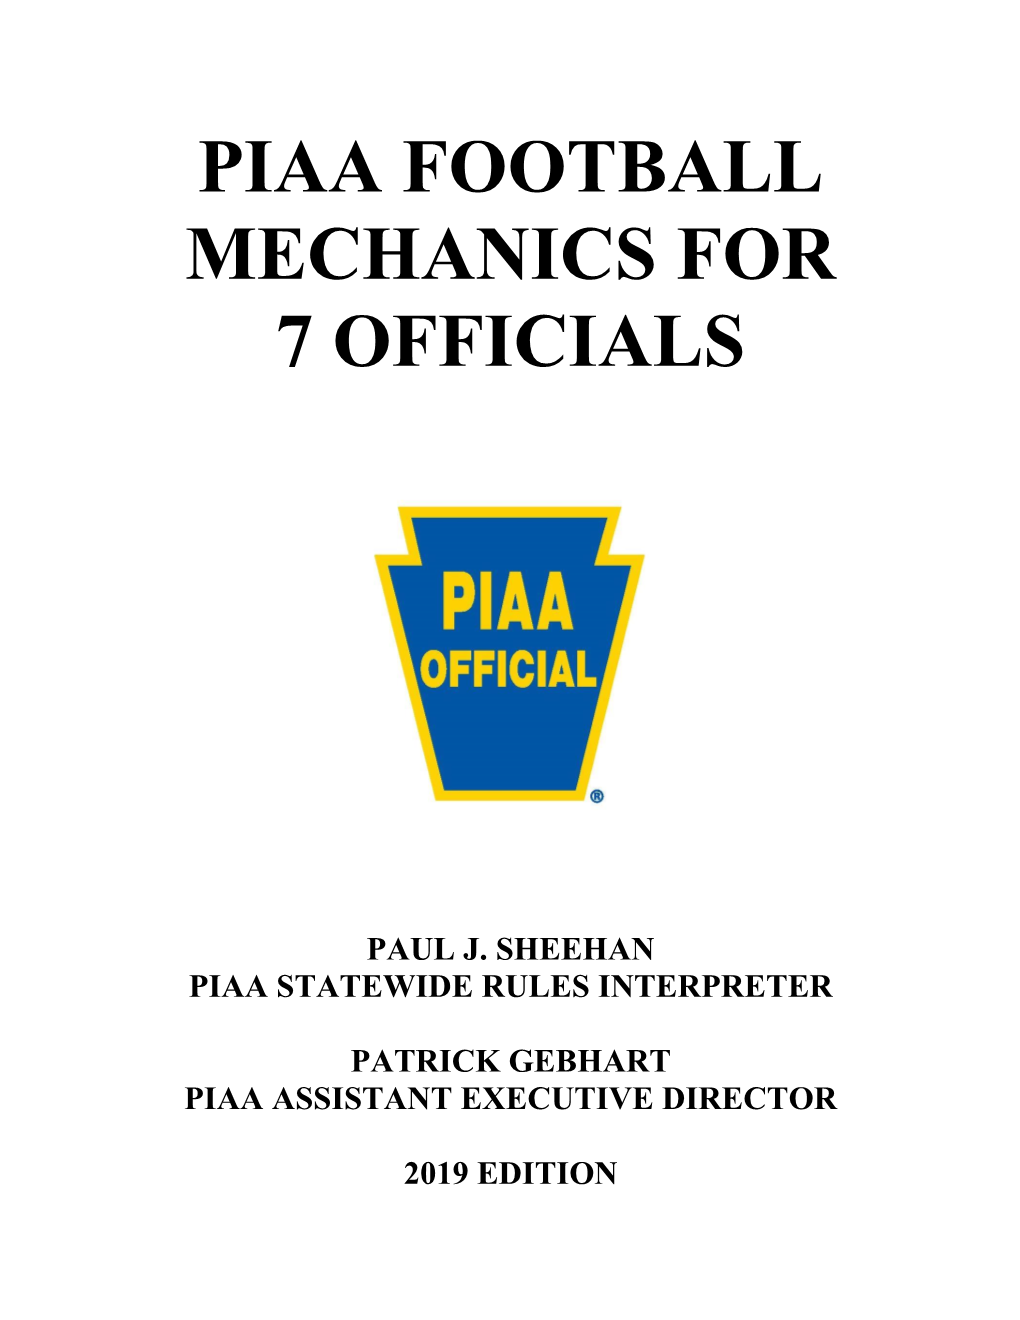 Piaa Football Mechanics for 7 Officials